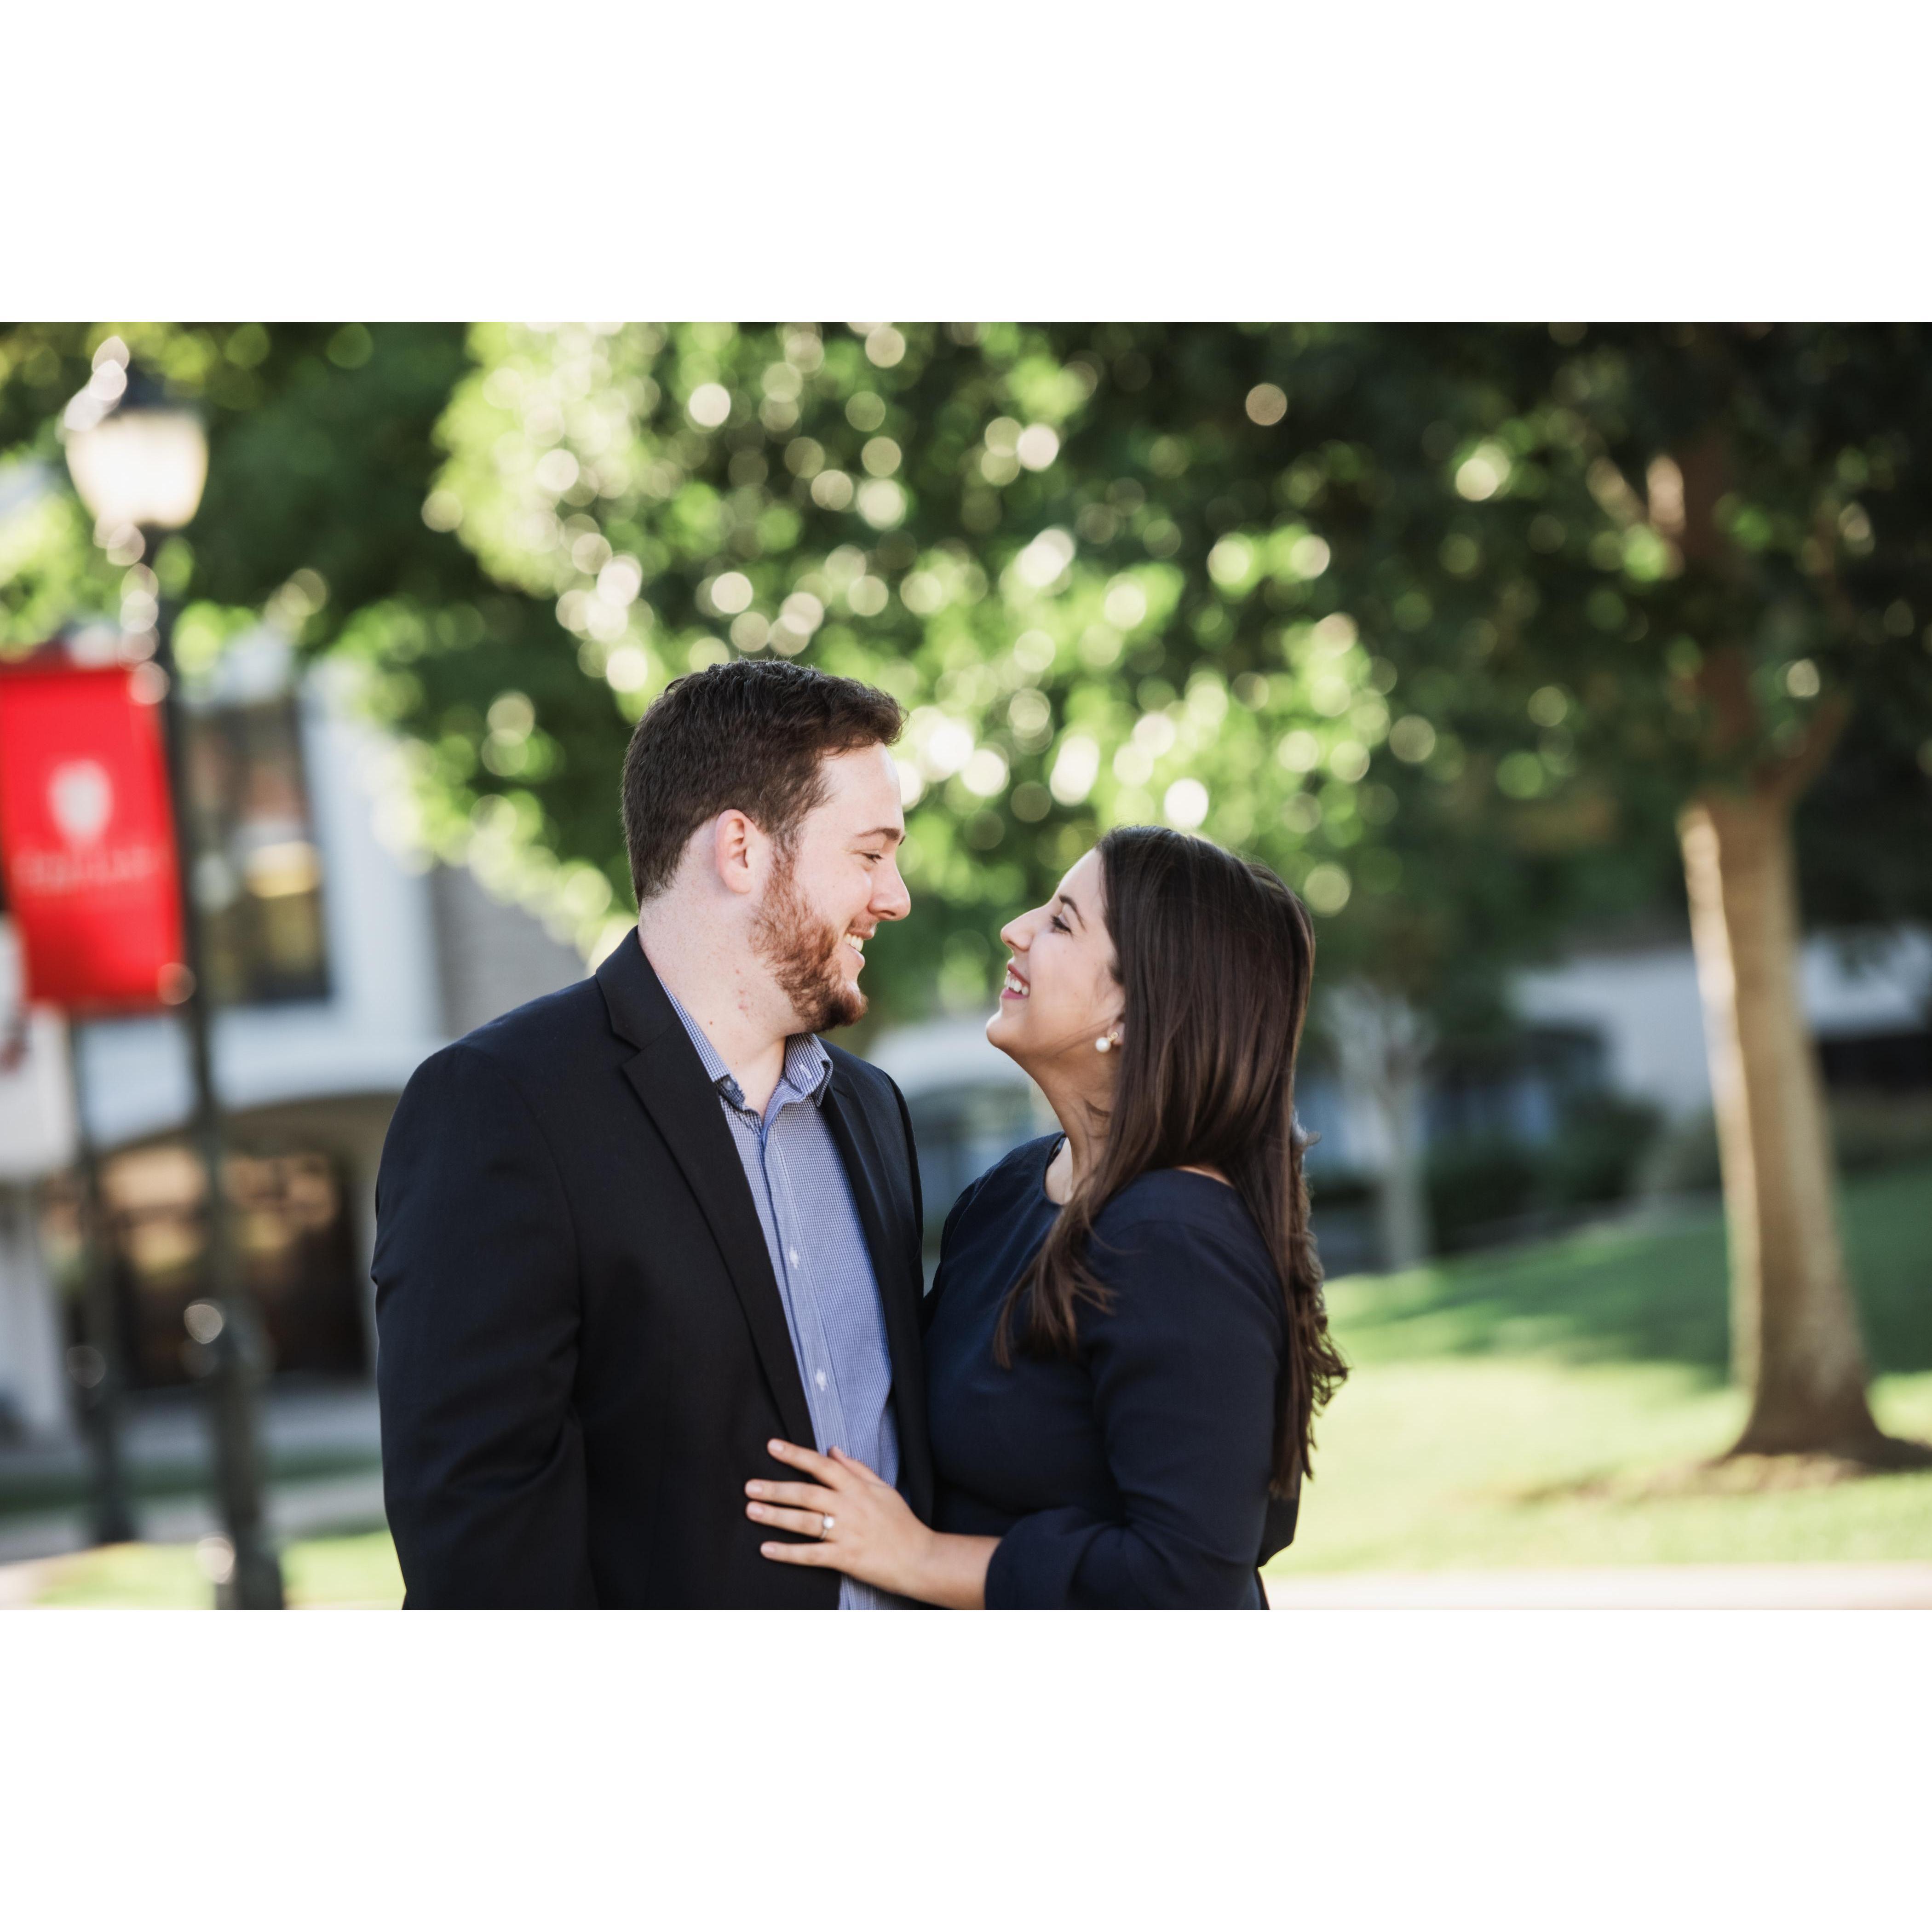 Engagement shoot at Fairfield University